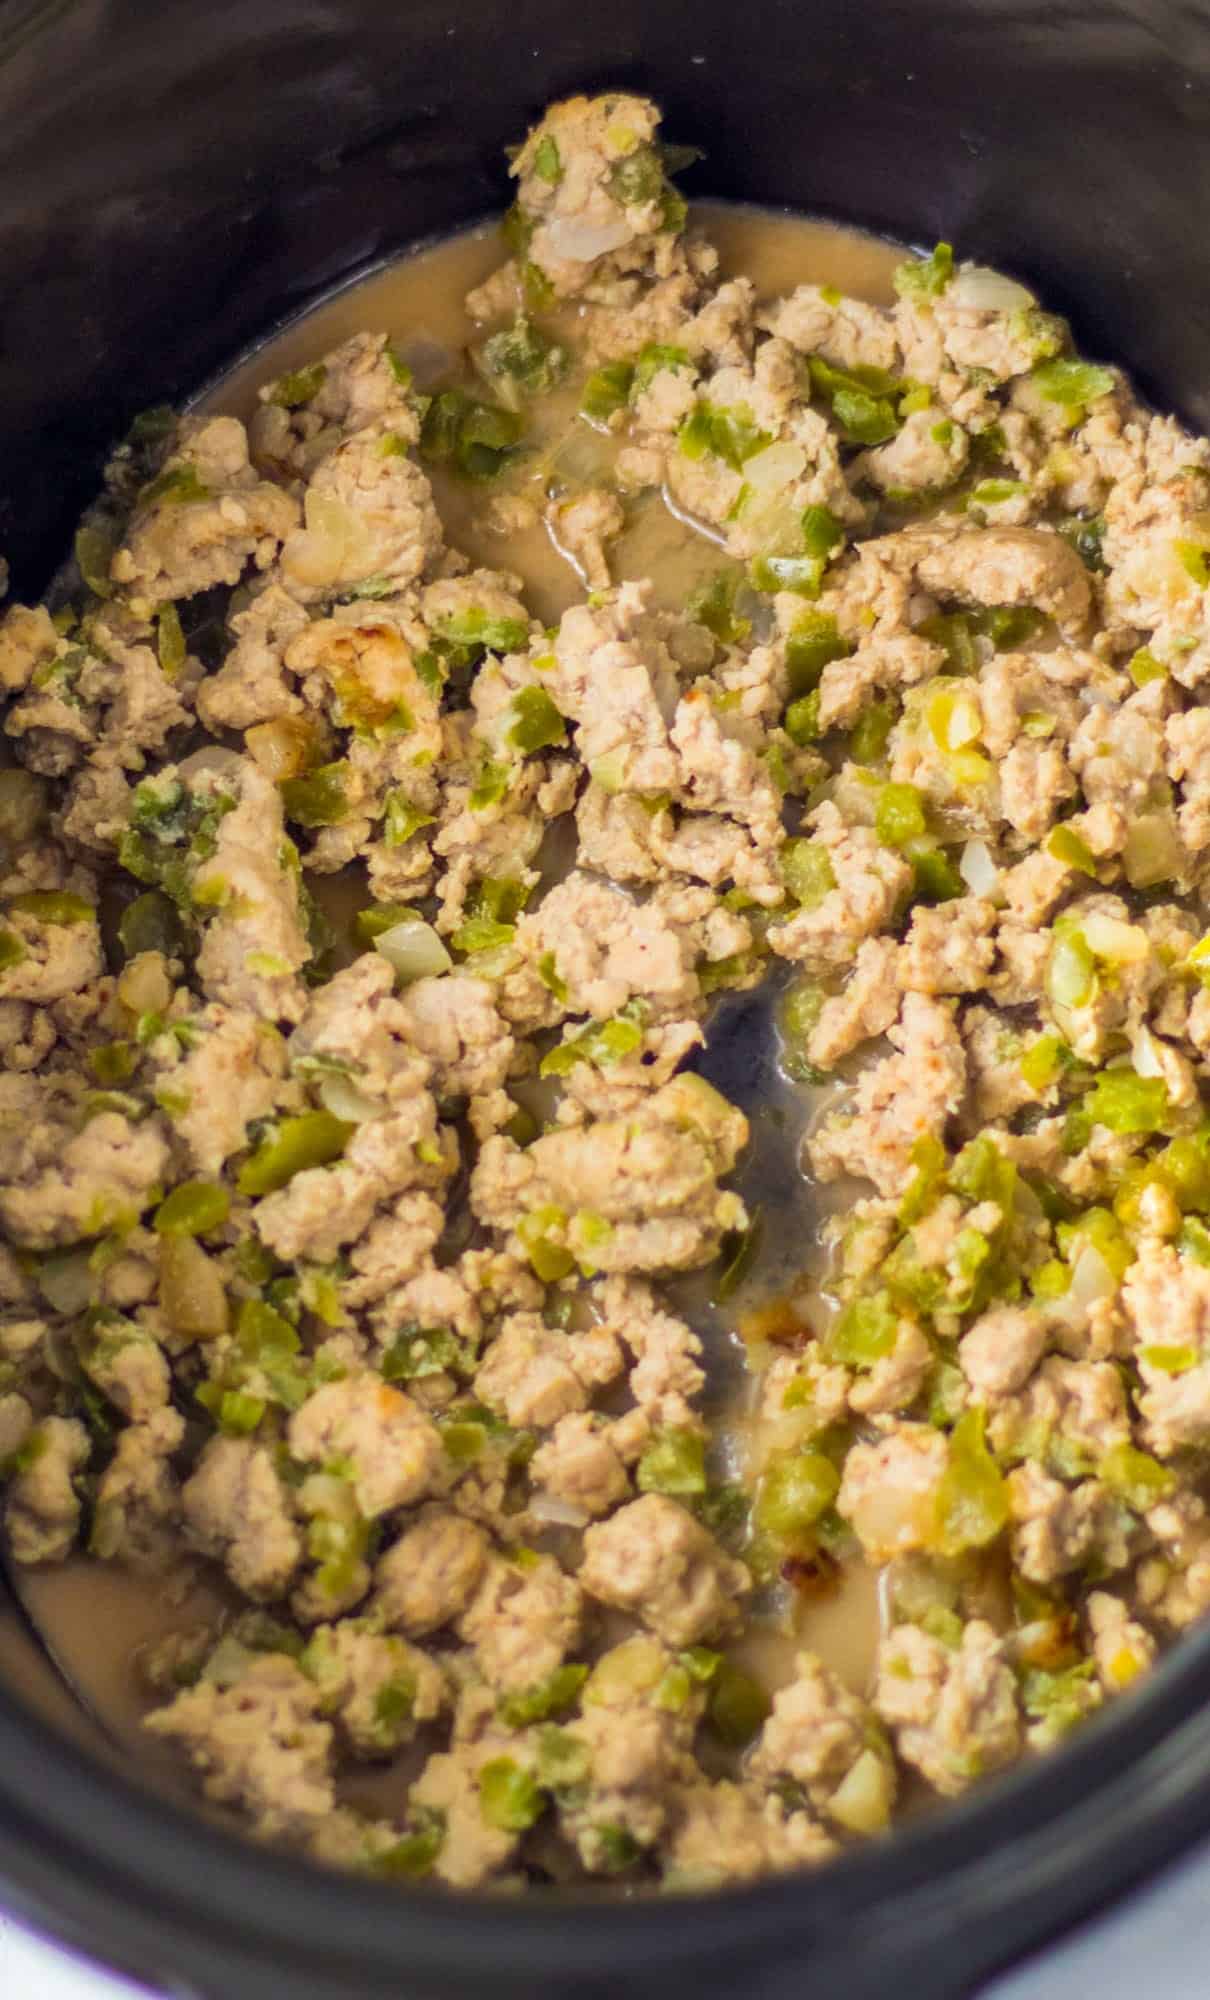 Chicken cheesesteak sloppy joes in a slow cooker.